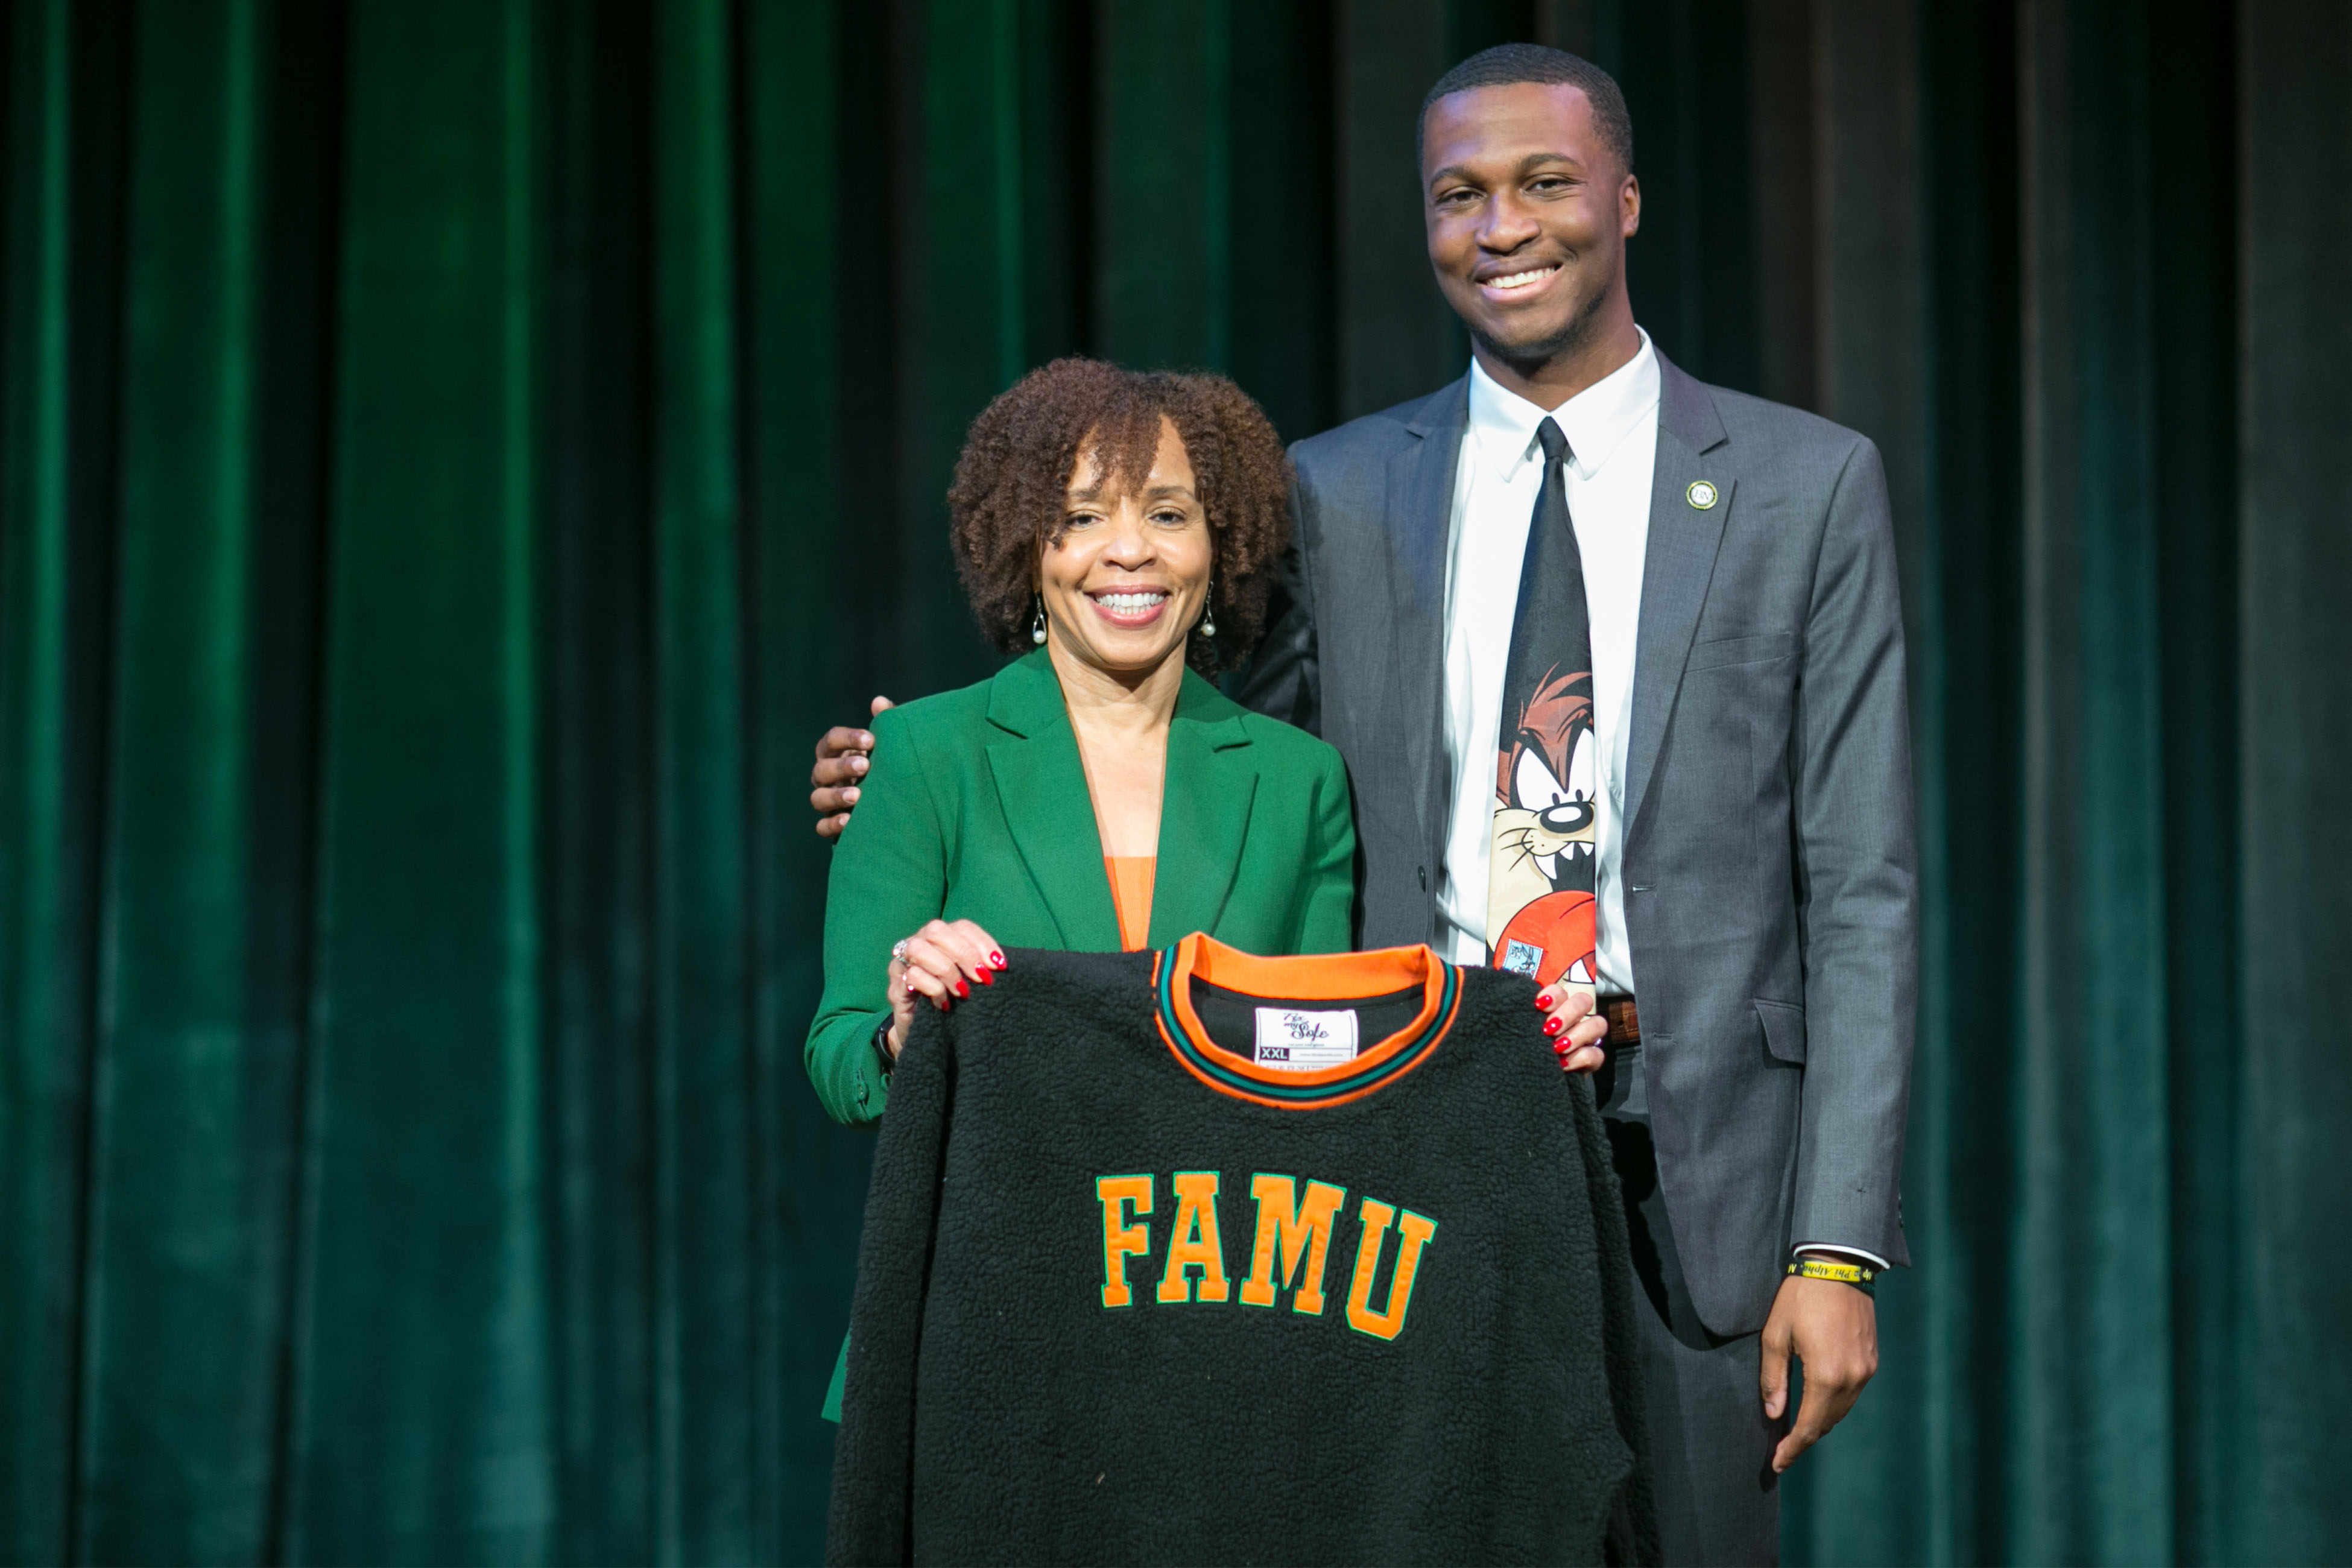 Alumna and President of ABC News Kim Godwin with Graphic Communication Alumnus Elijah Rutland hold his custom designed FAMU sweater.